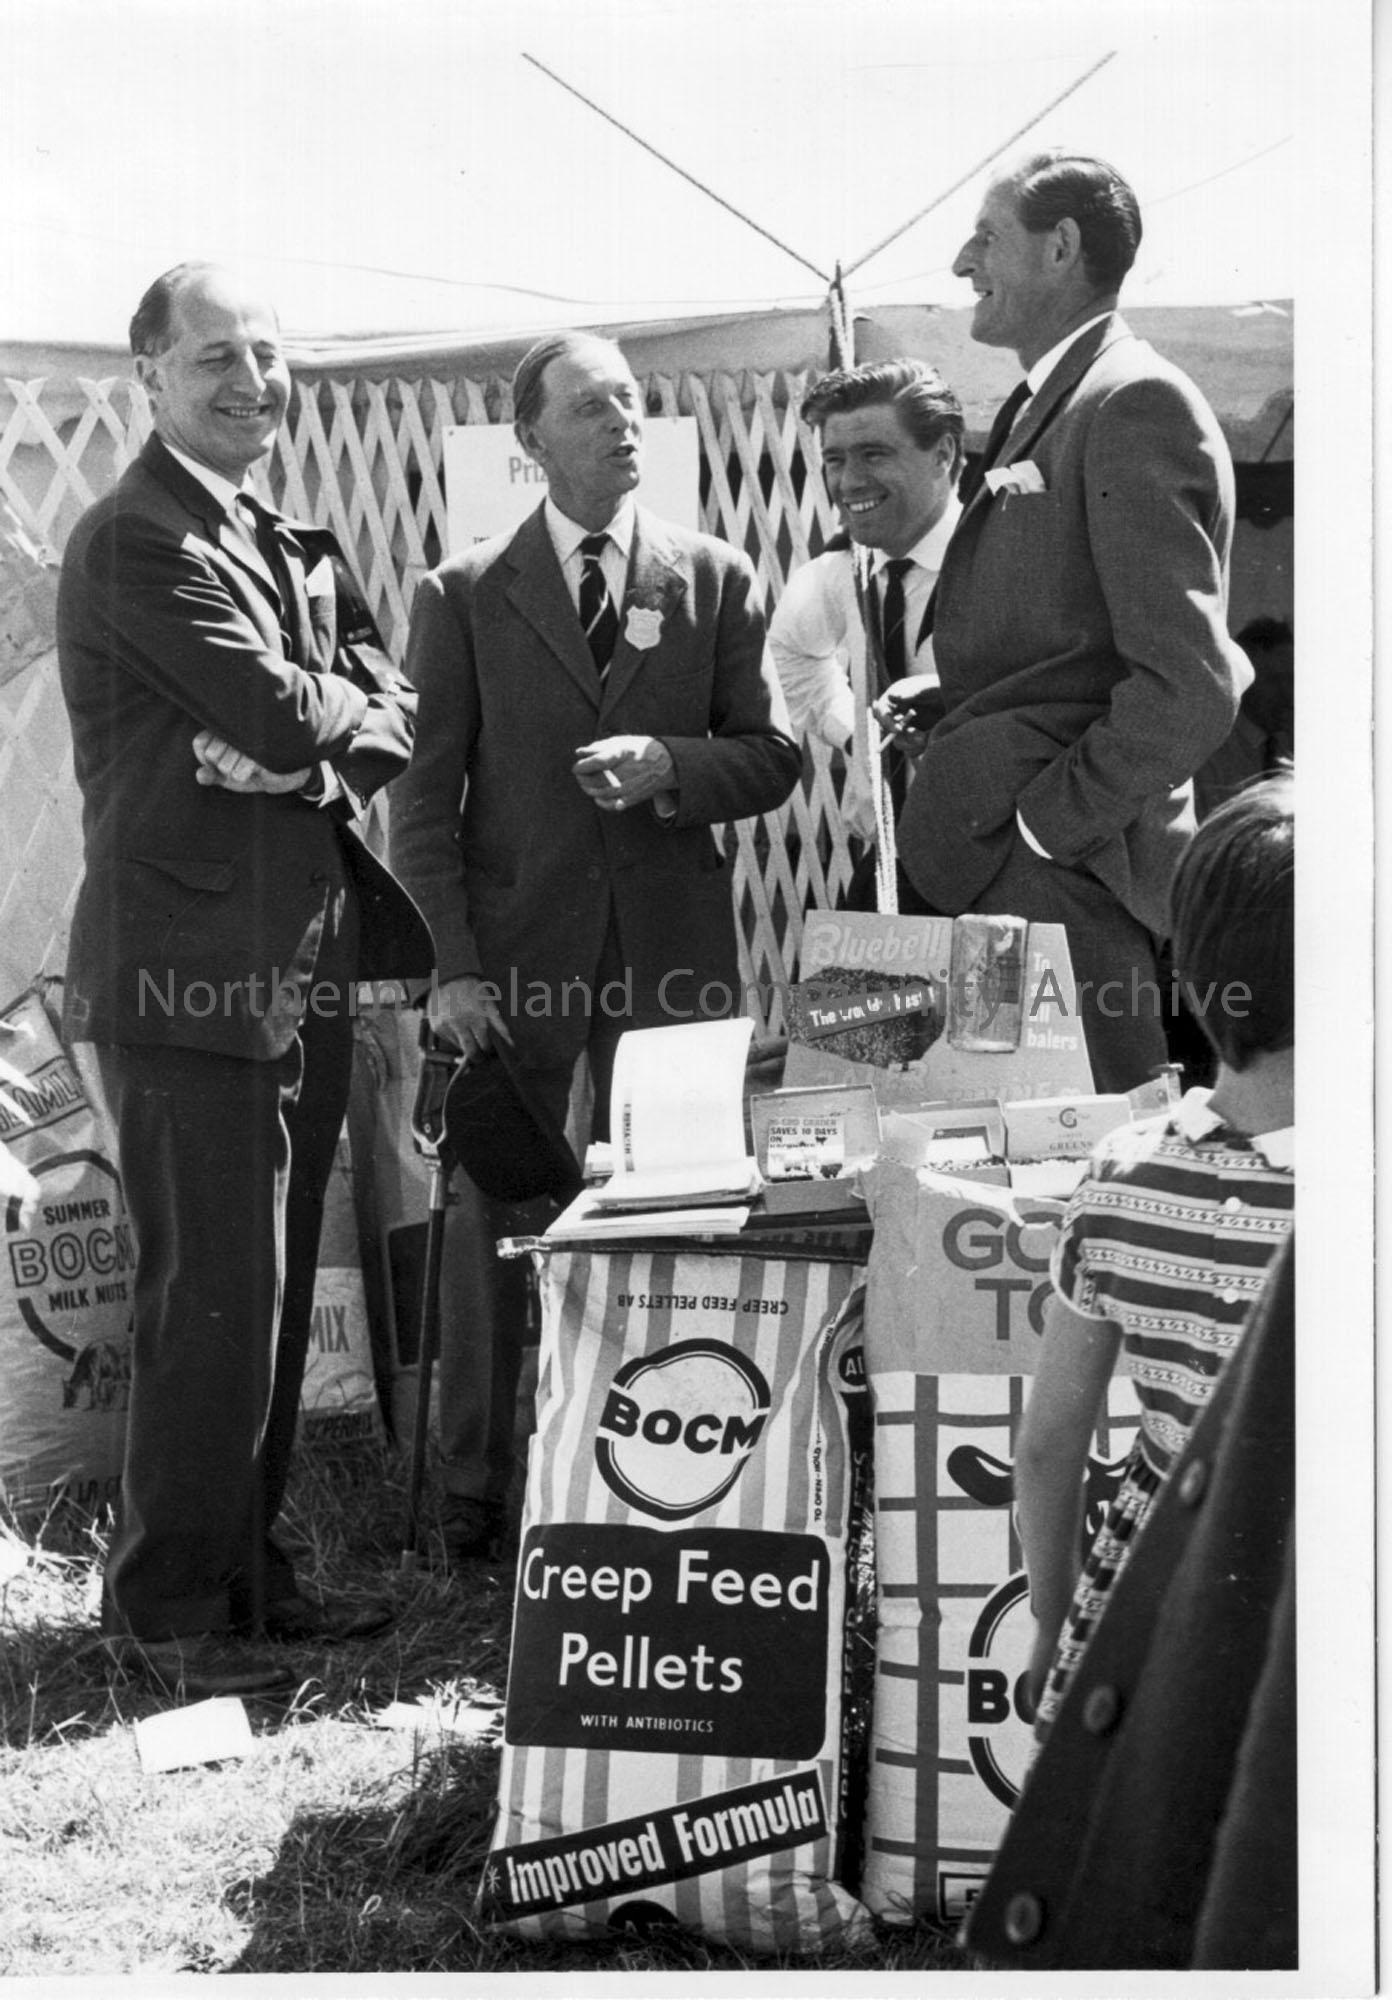 Photographic print of men talking at a Creep Feed Pellets stall.